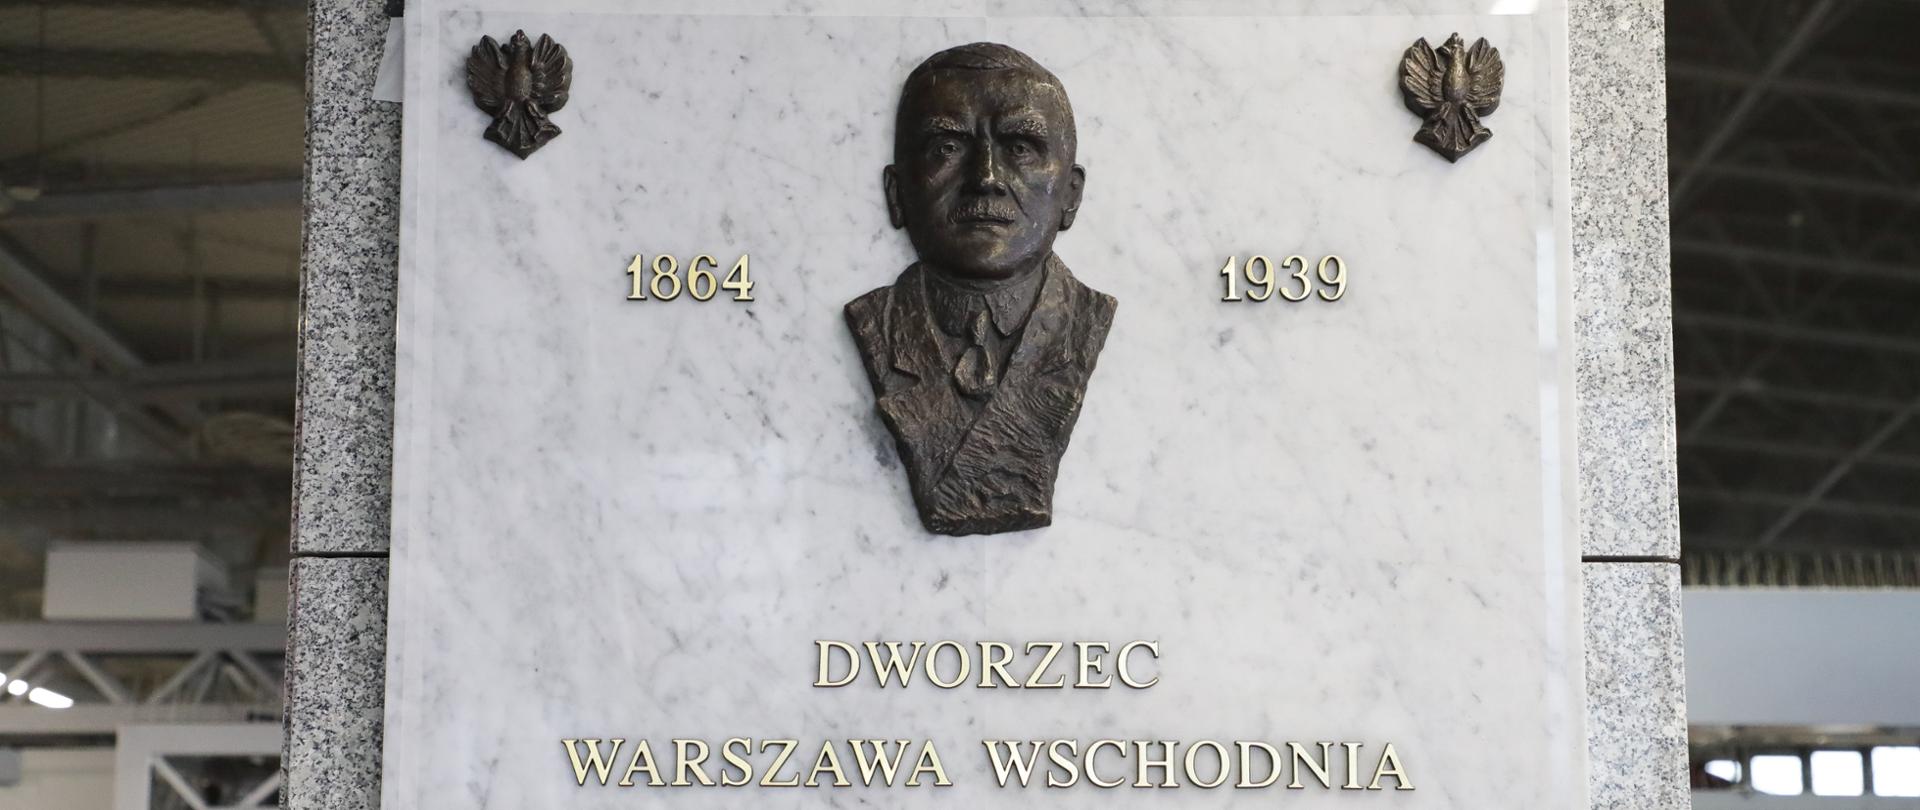 Roman Dmowski patronem dworca Warszawa Wschodnia, fot. Danuta Matloch